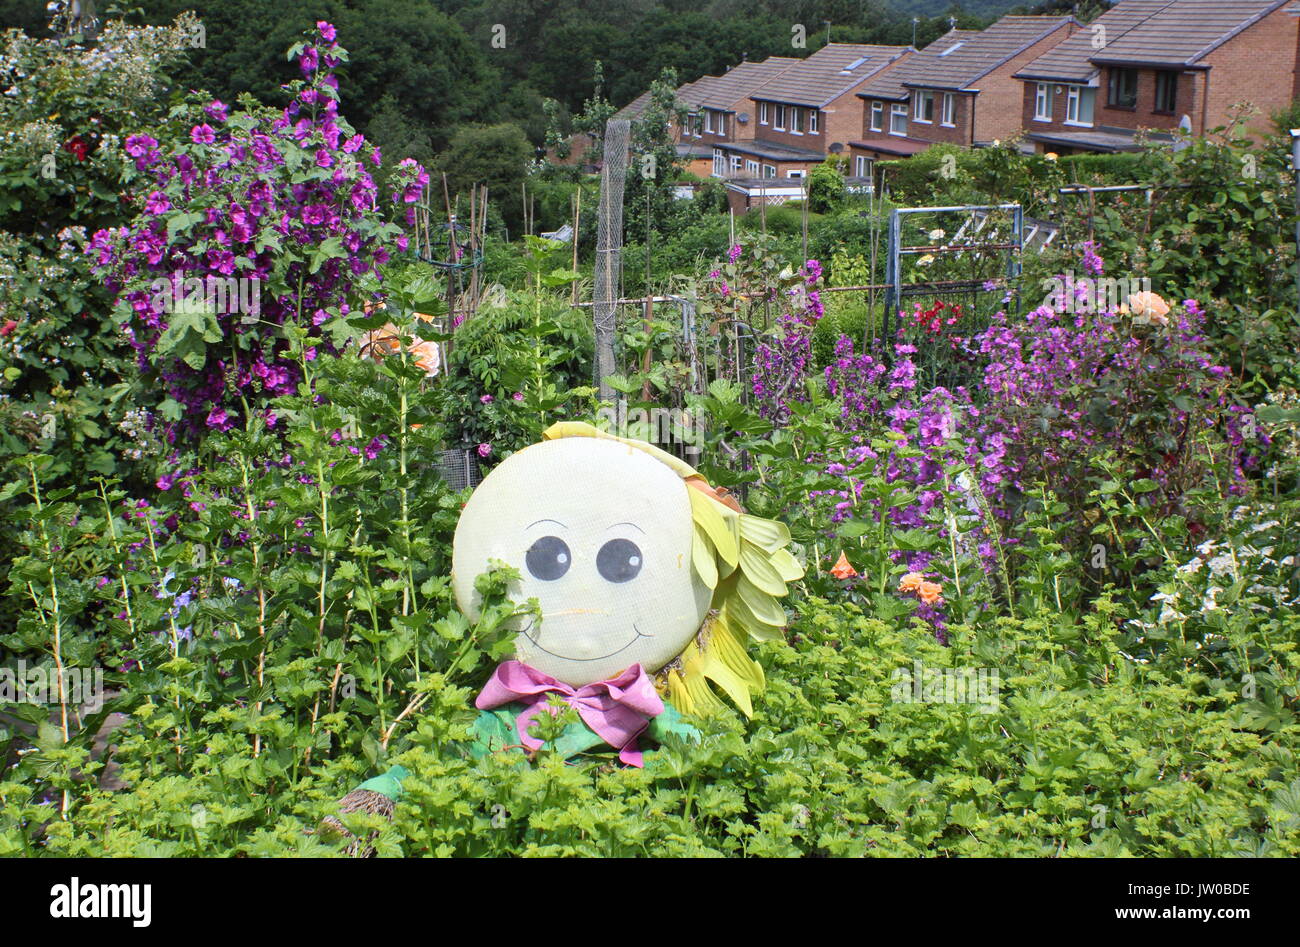 A scarecrow in a suburban allotment garden during an open allotment event in summer, near Sheffield, England, UK Stock Photo